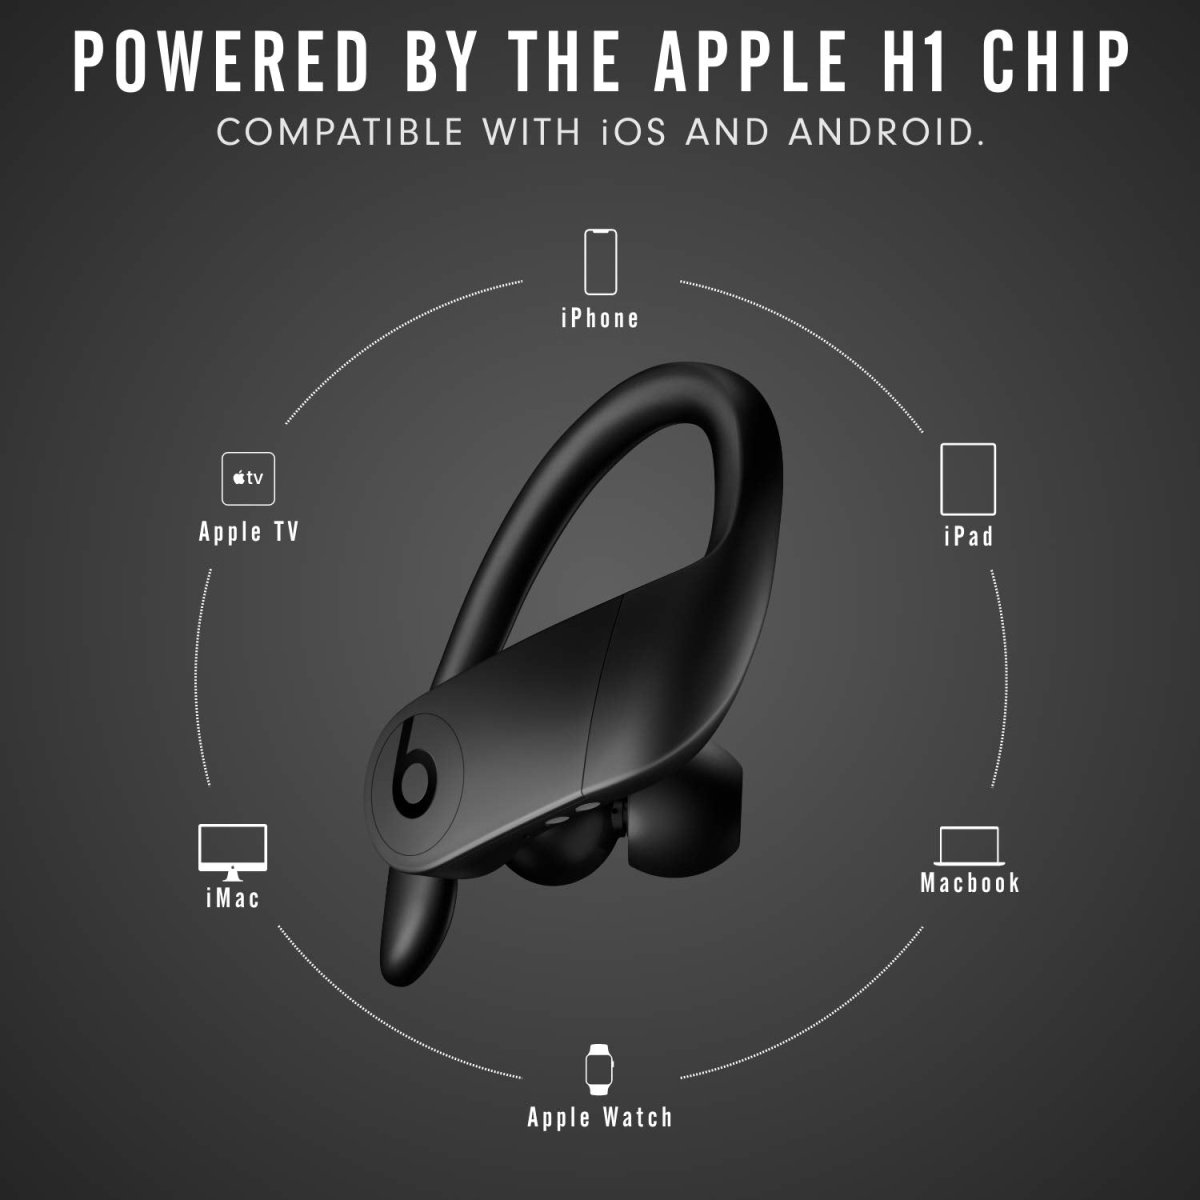 Beats Powerbeats Pro Wireless Earbuds - Apple H1 Headphone Chip, Class 1 Bluetooth Headphones, 9 Hours of Listening Time, Sweat Resistant, Built-in Microphone - Black - Gadget Wonder Store